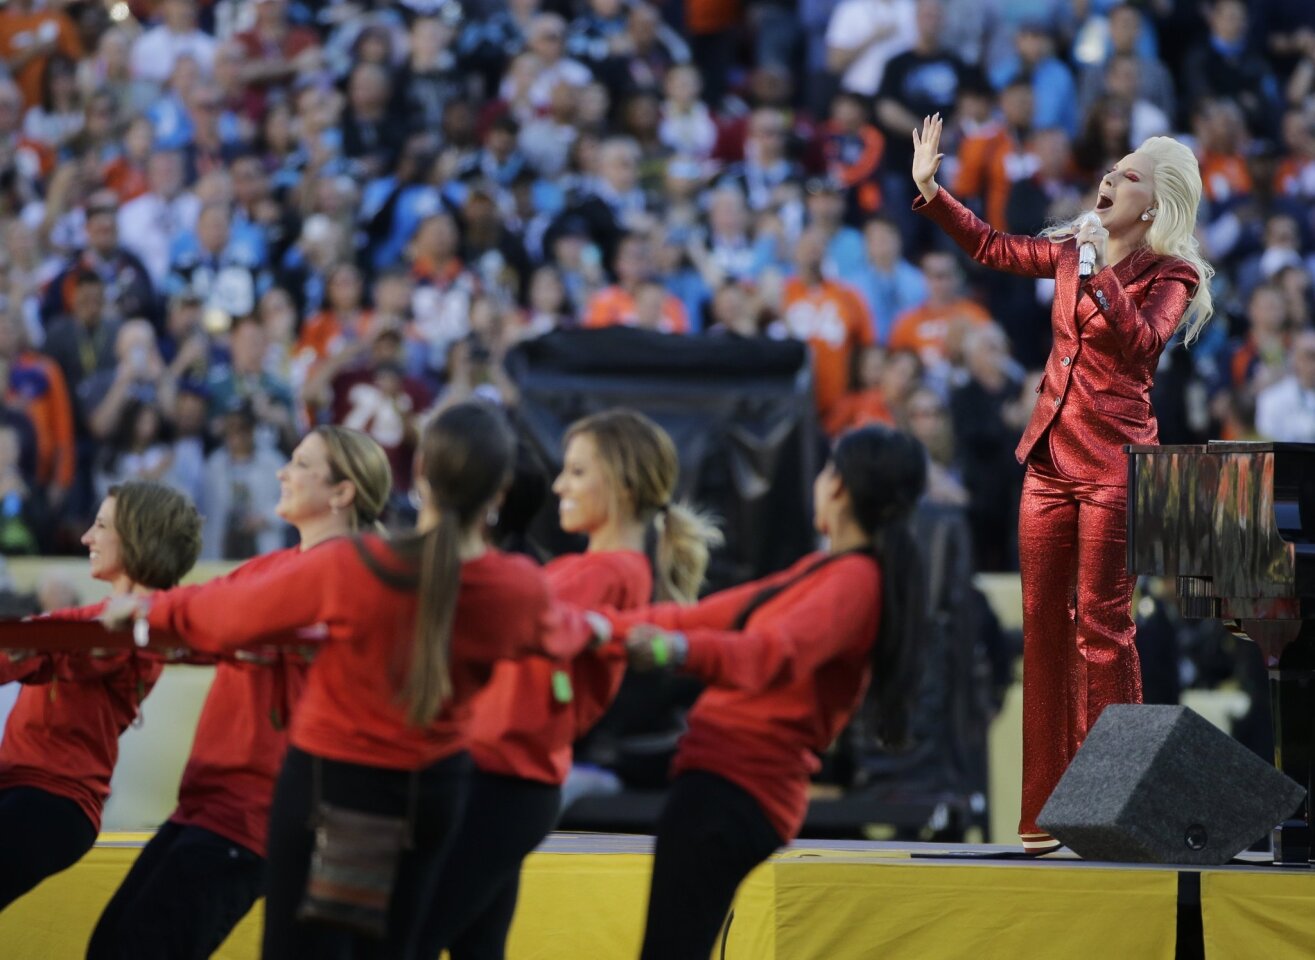 Lady Gaga sings the national anthem before the NFL Super Bowl 50 football game between the Denver Broncos and the Carolina Panthers, Sunday, Feb. 7, 2016, in Santa Clara, Calif. (AP Photo/Jae C. Hong)